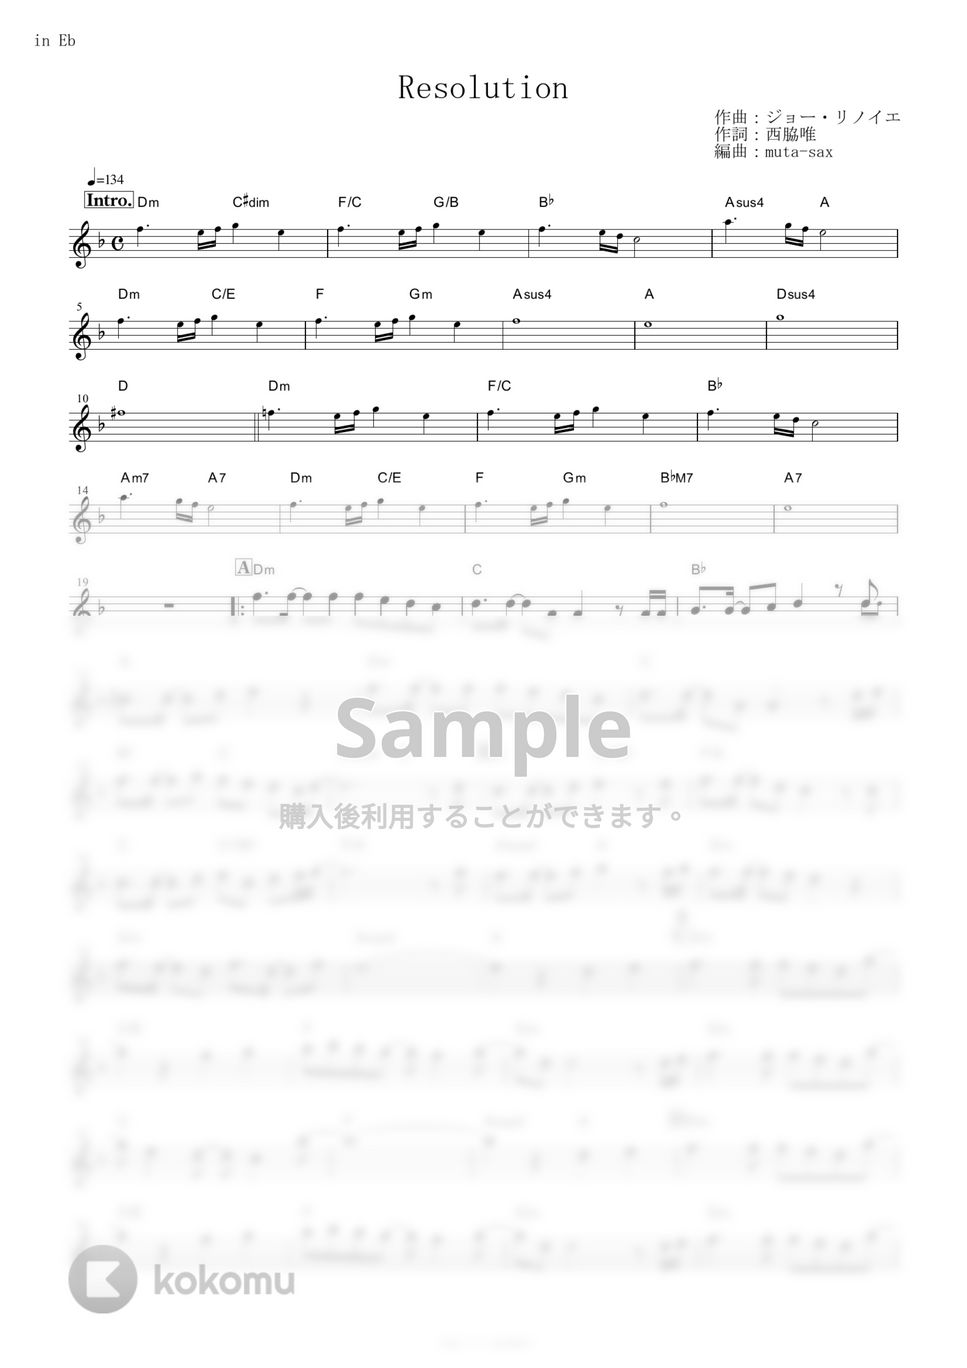 ROmantic Mode - Resolution (『機動新世紀ガンダムX』 / in Eb) by muta-sax